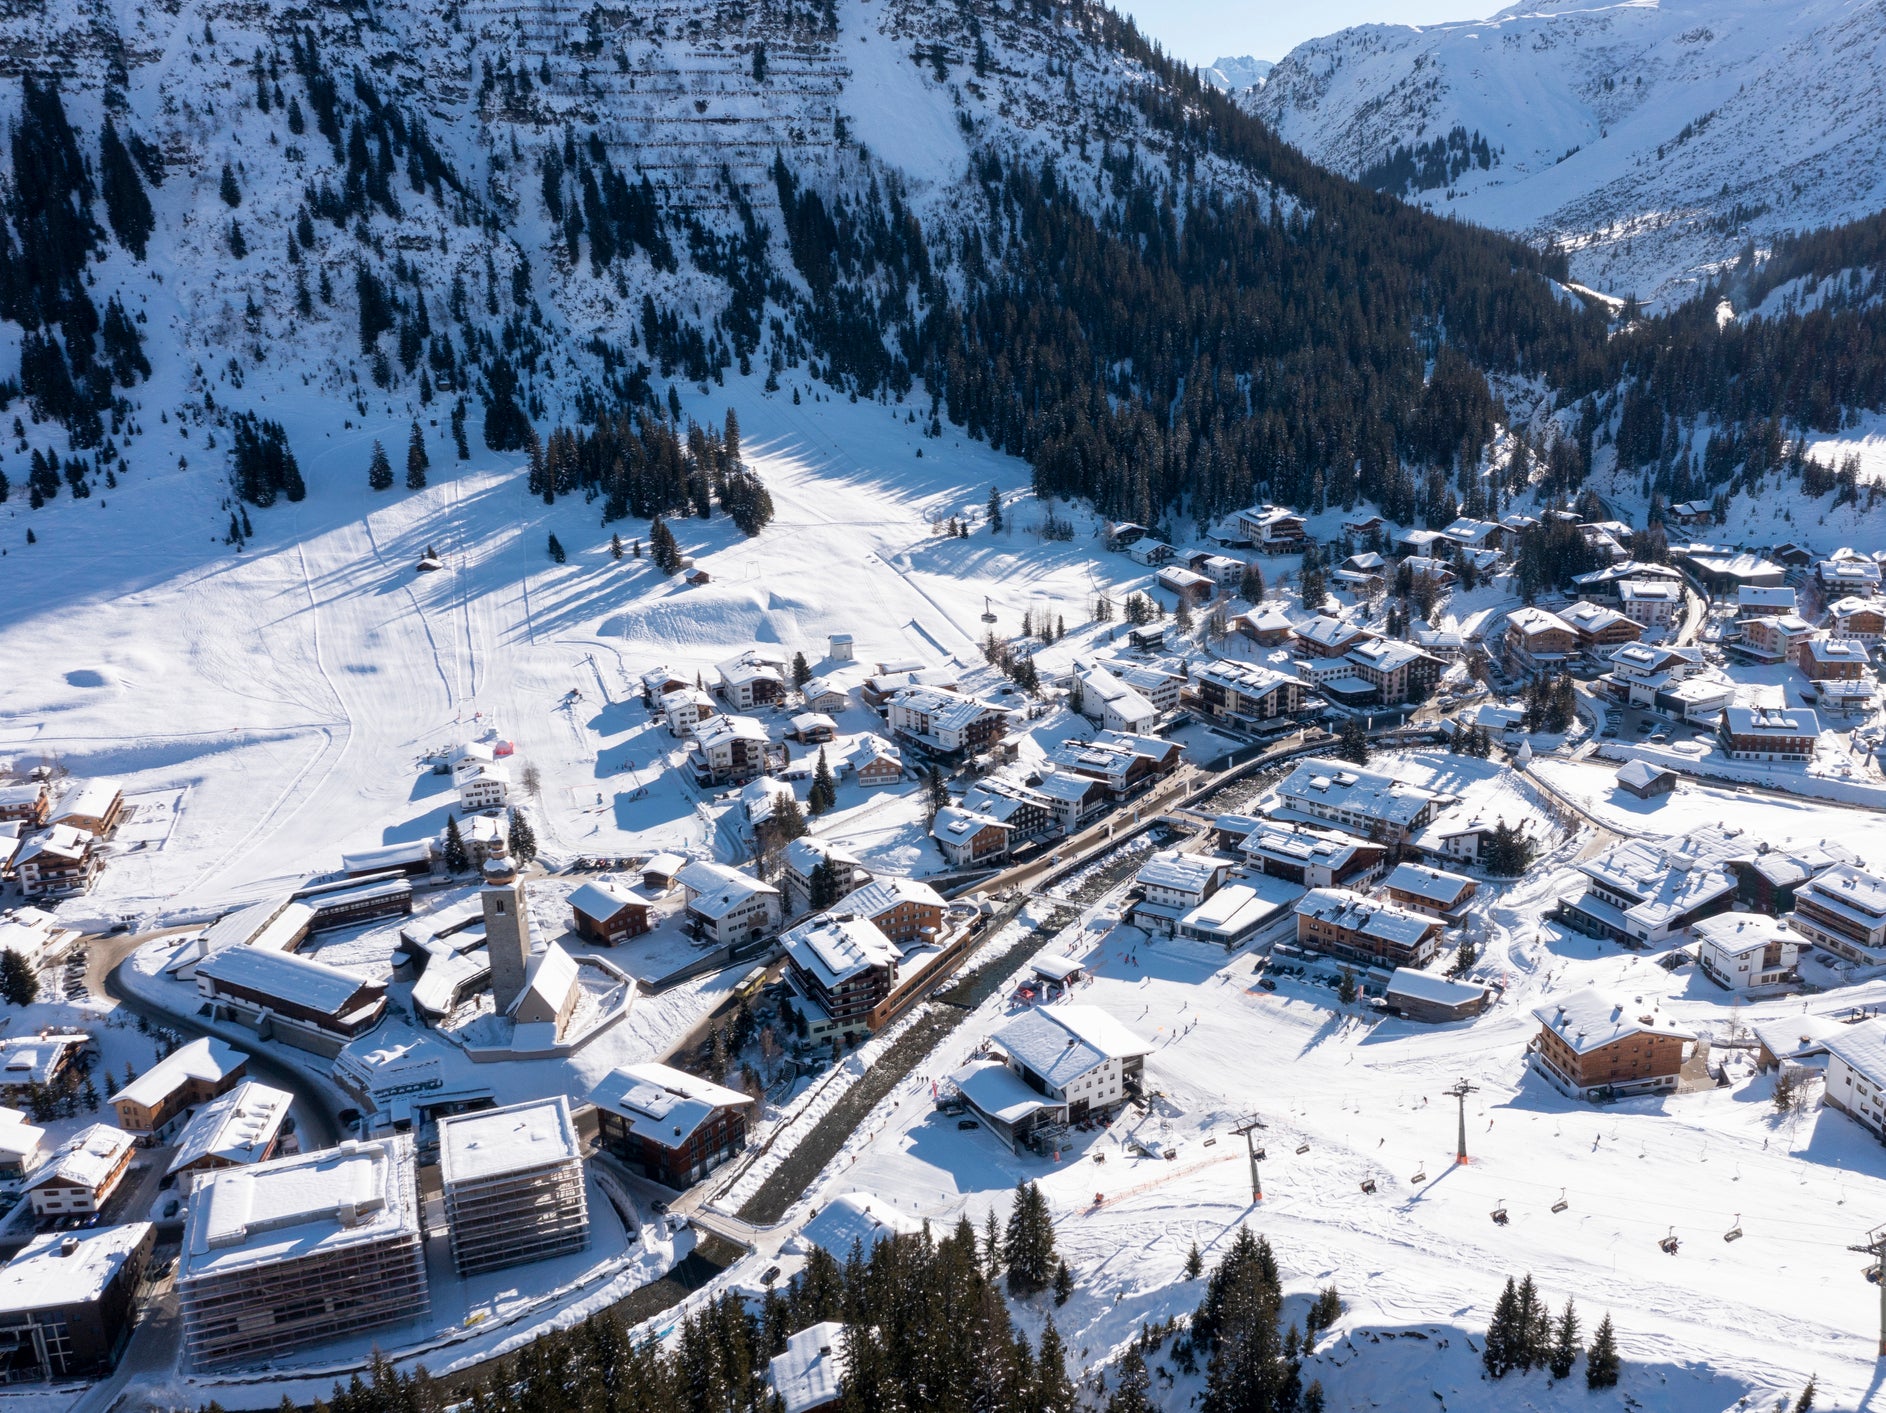 Lech, along with St Anton, combine to form Austria’s largest ski area